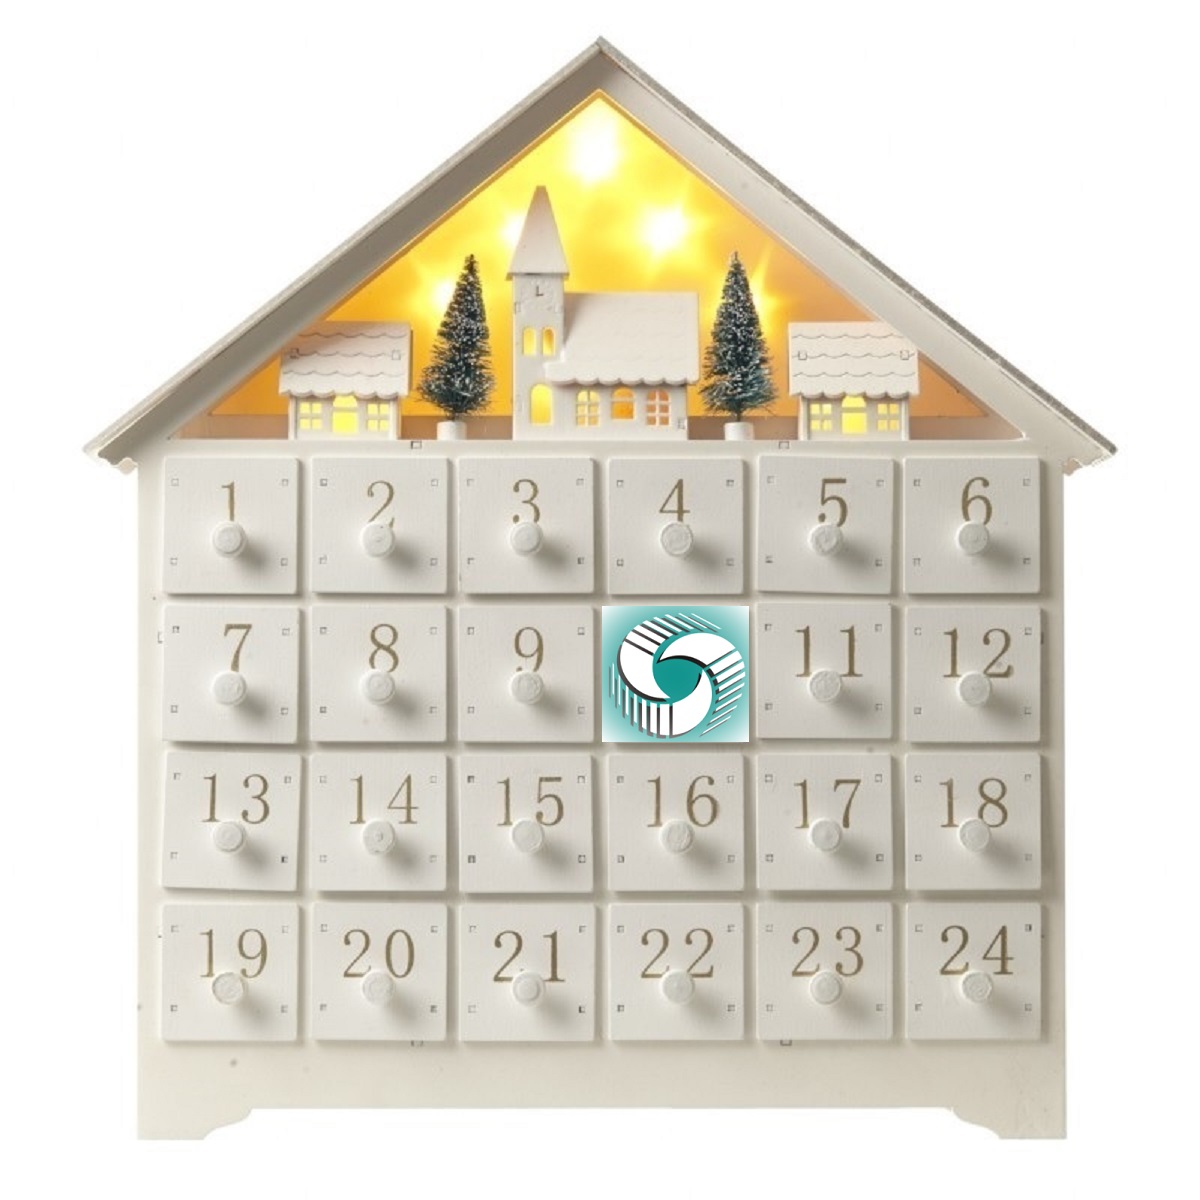 Day 10 – Frontier’s Advent Calendar